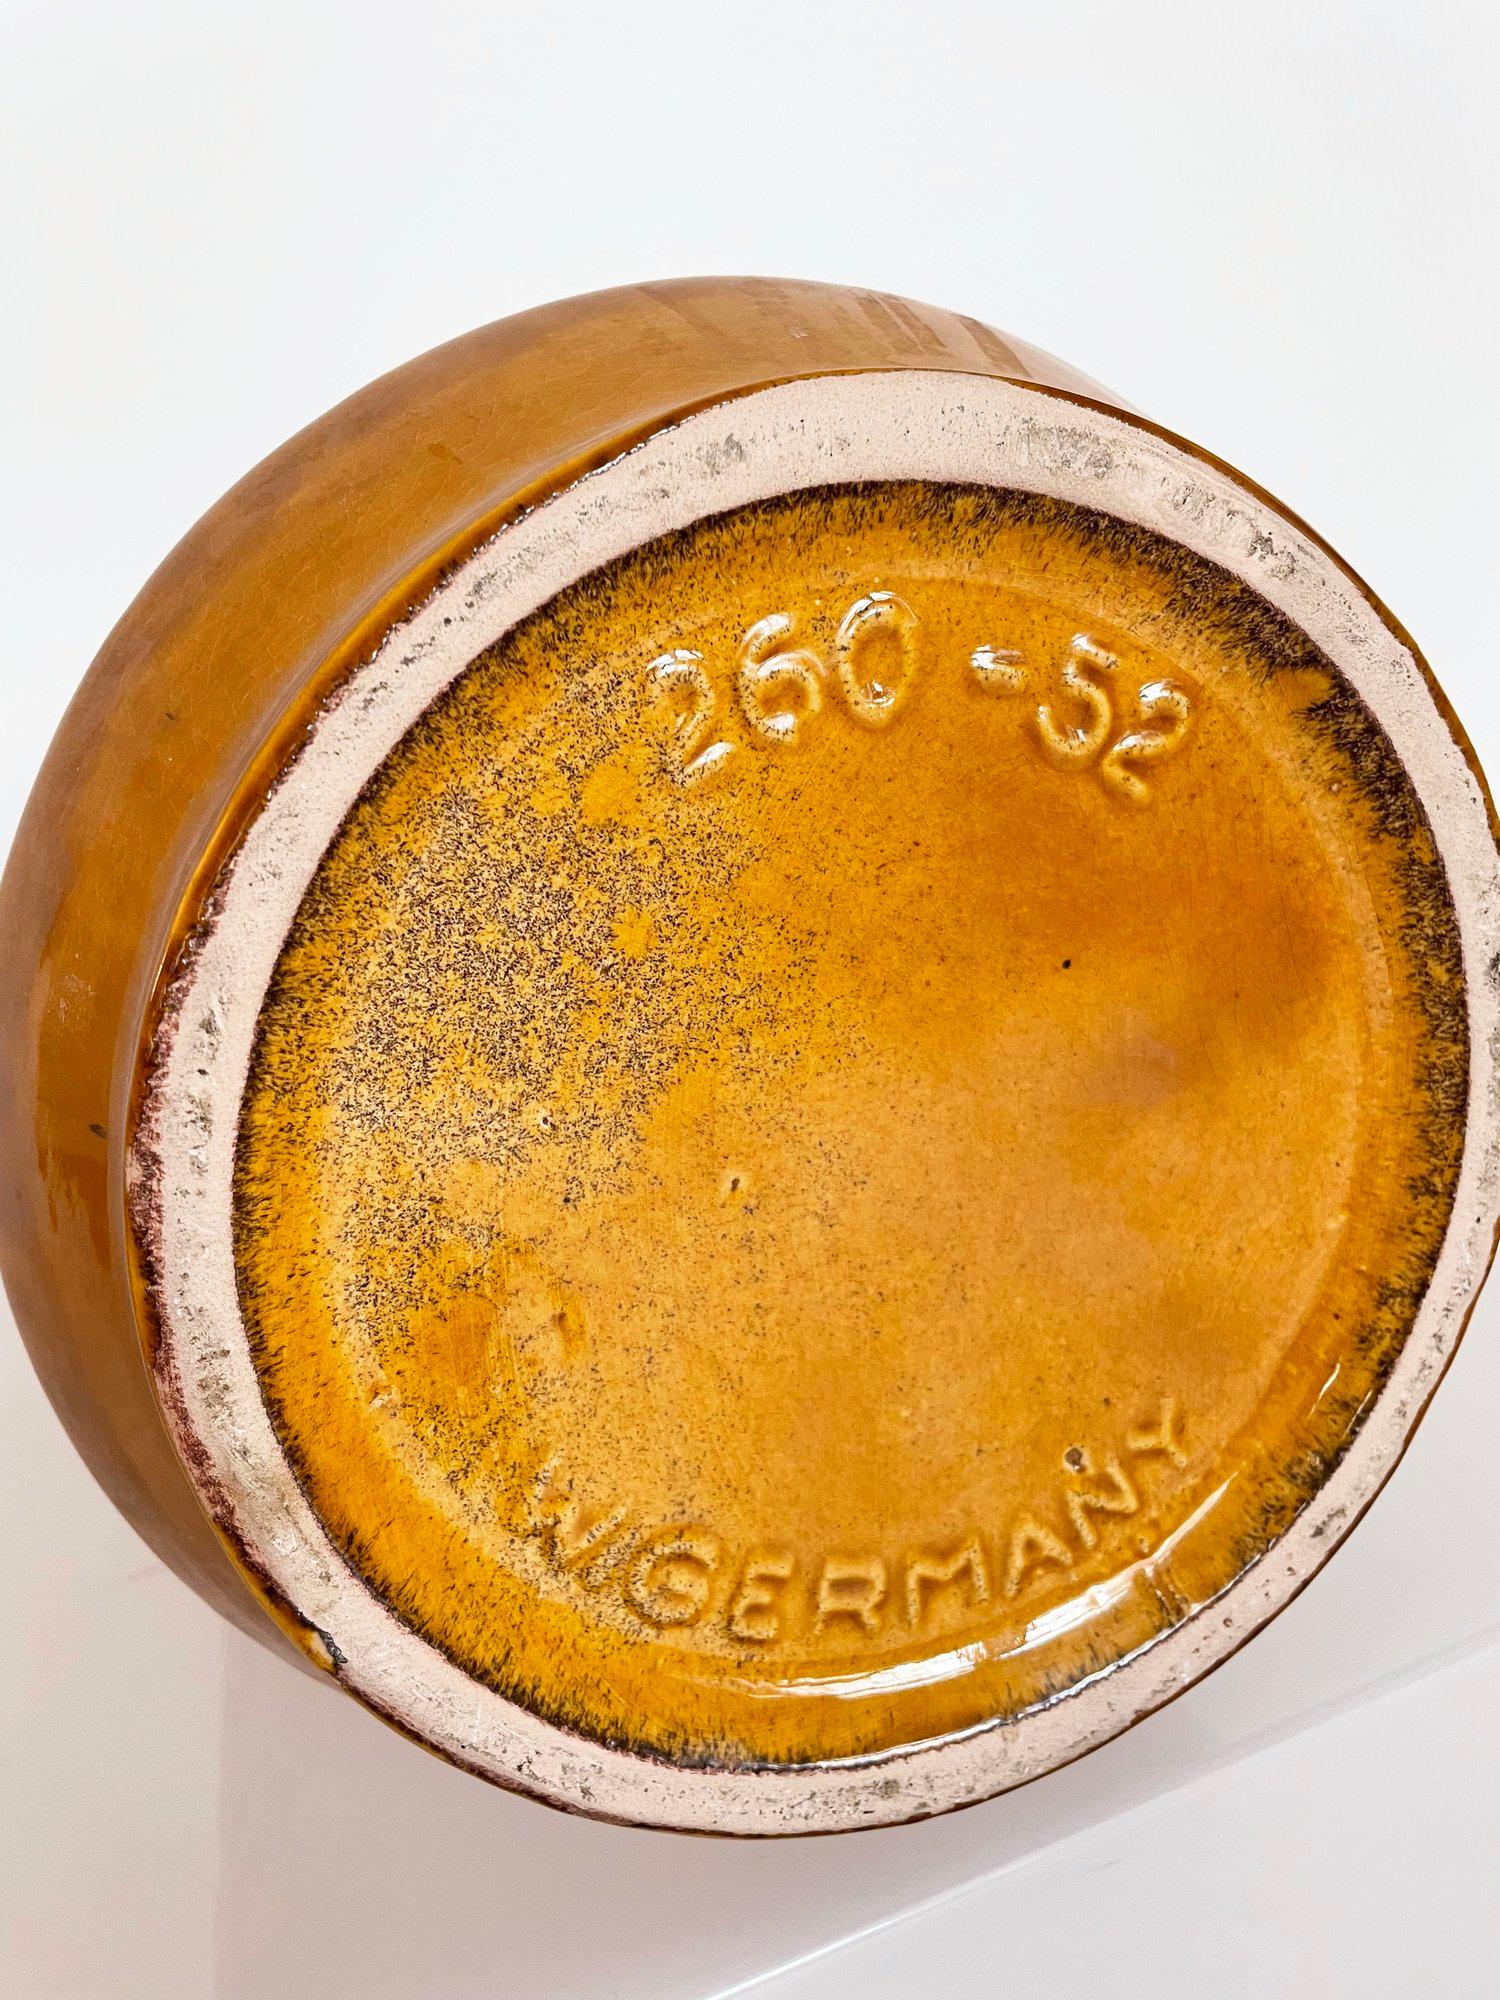 1960’s Scheurich Keramik West German Ceramic ‘Inka’ Vase. Numbered on base: W. Germany 260-52. 'Inka' pattern with ochre glaze.
